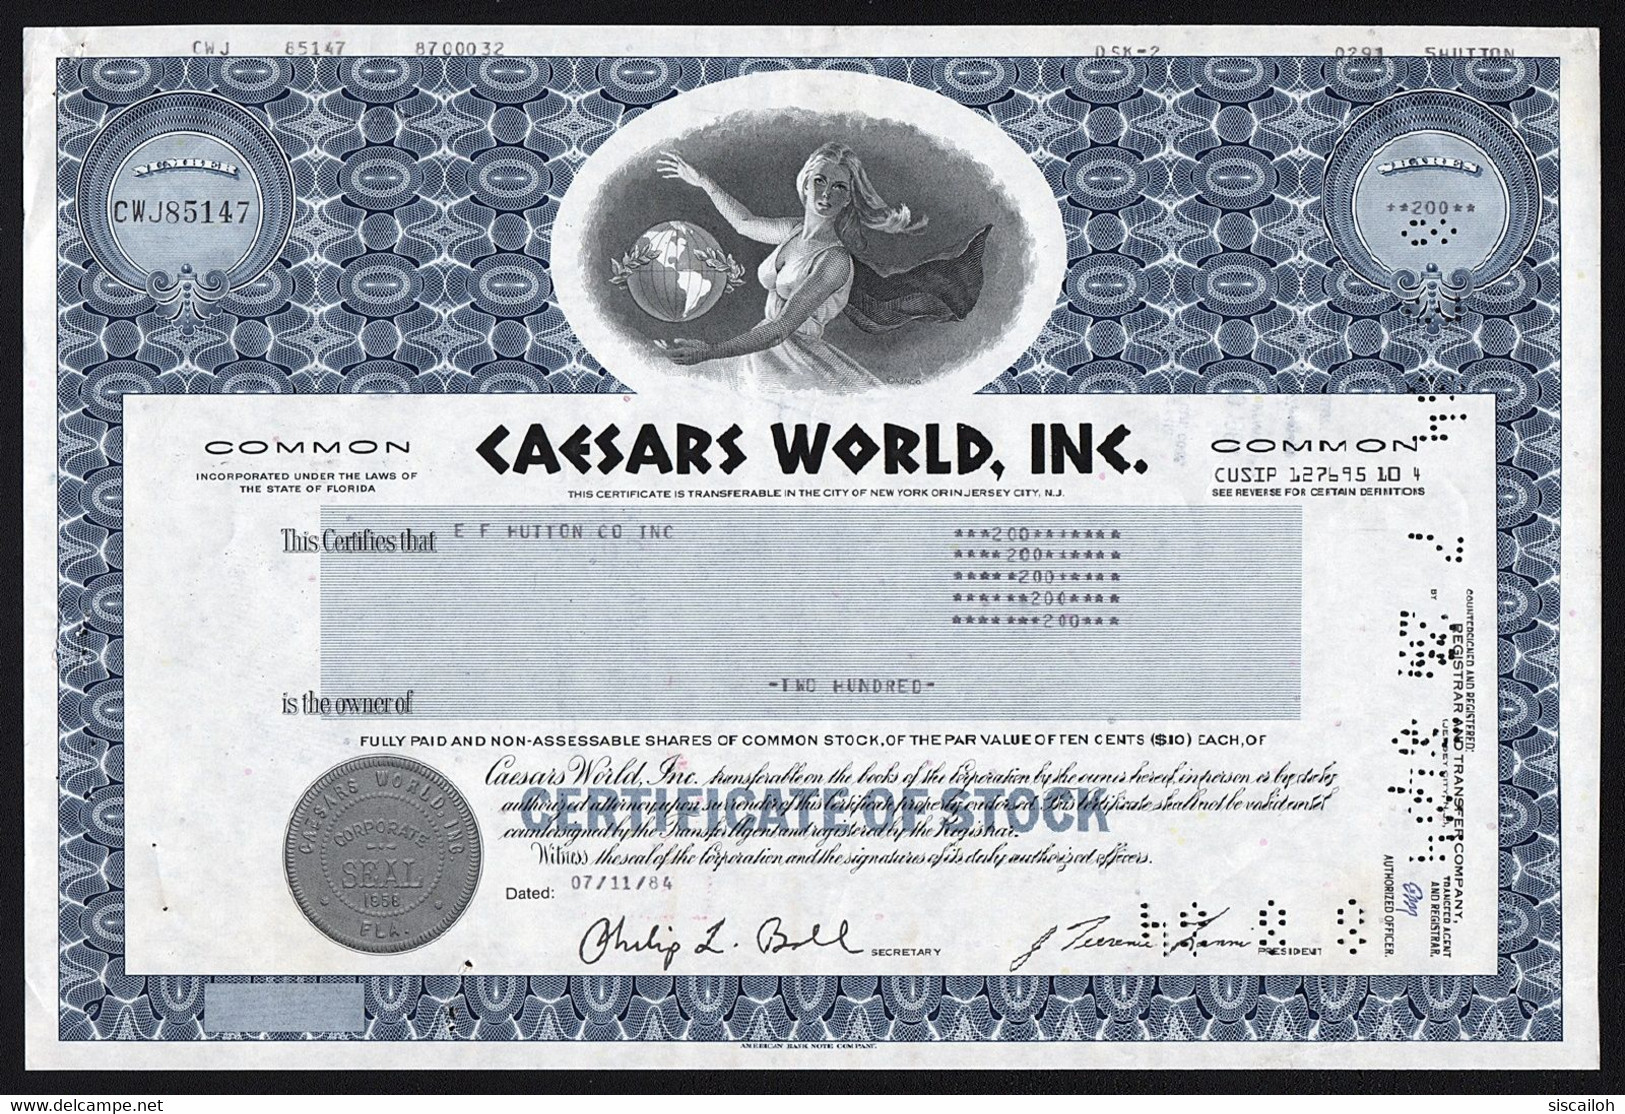 1984 Florida: Caesars World, Inc. - World Famous Las Vegas Casino - Casino